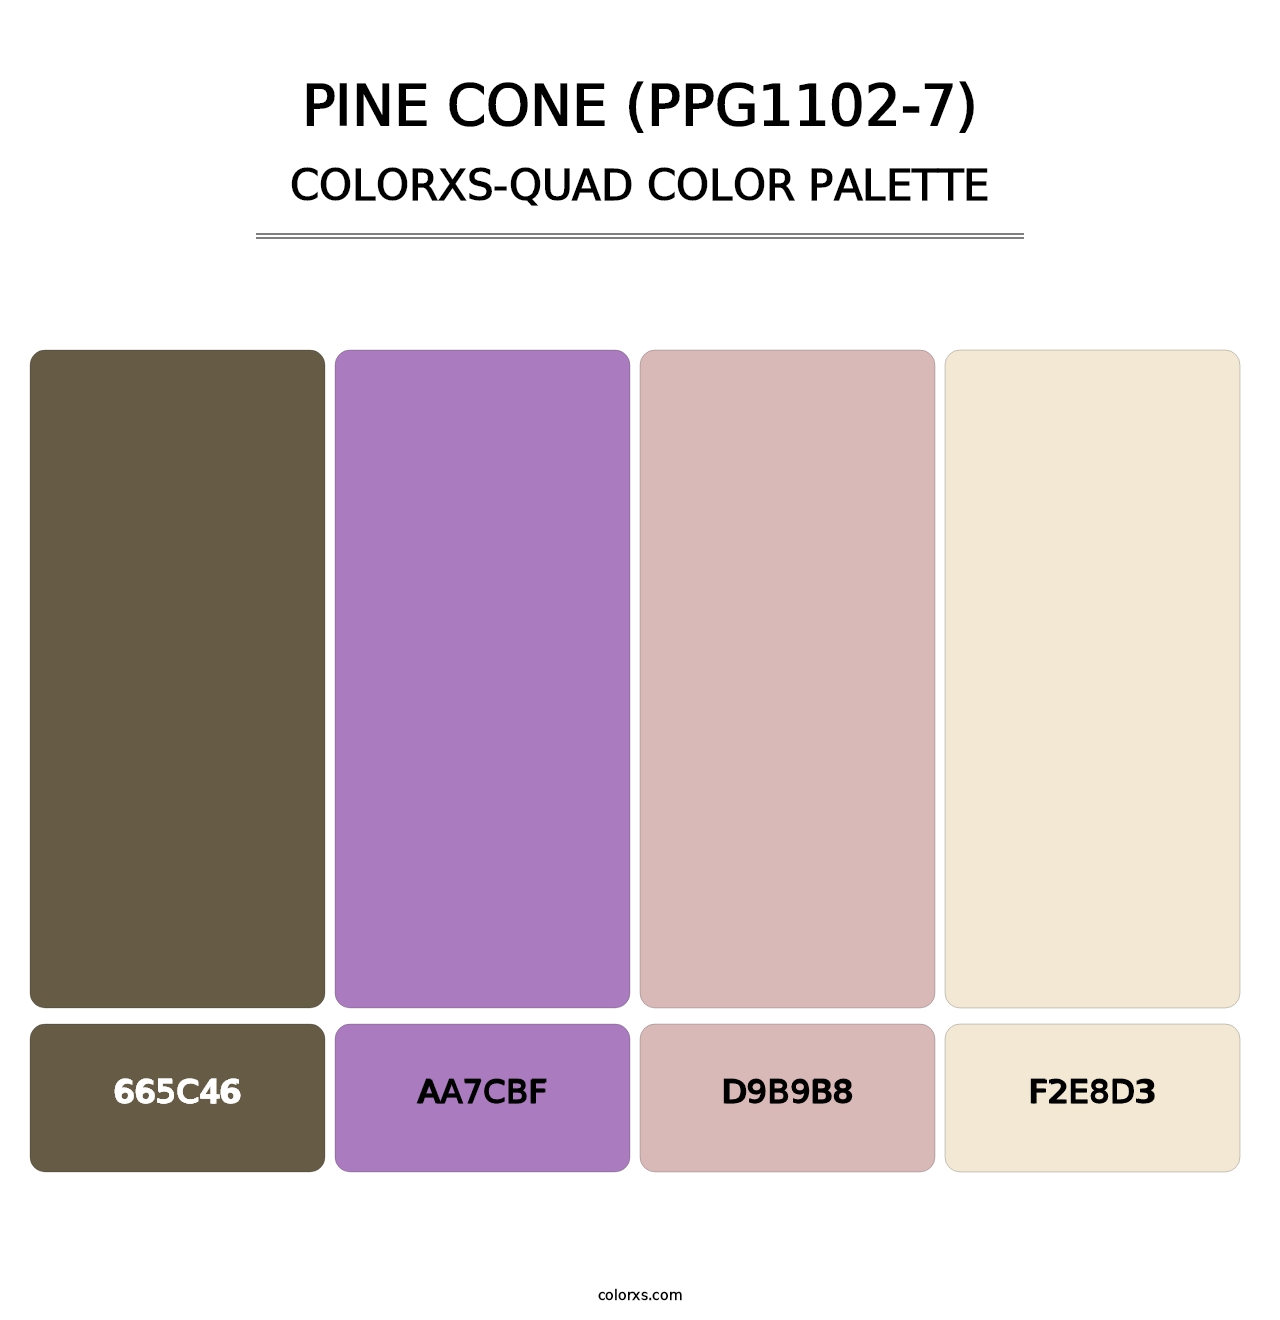 Pine Cone (PPG1102-7) - Colorxs Quad Palette